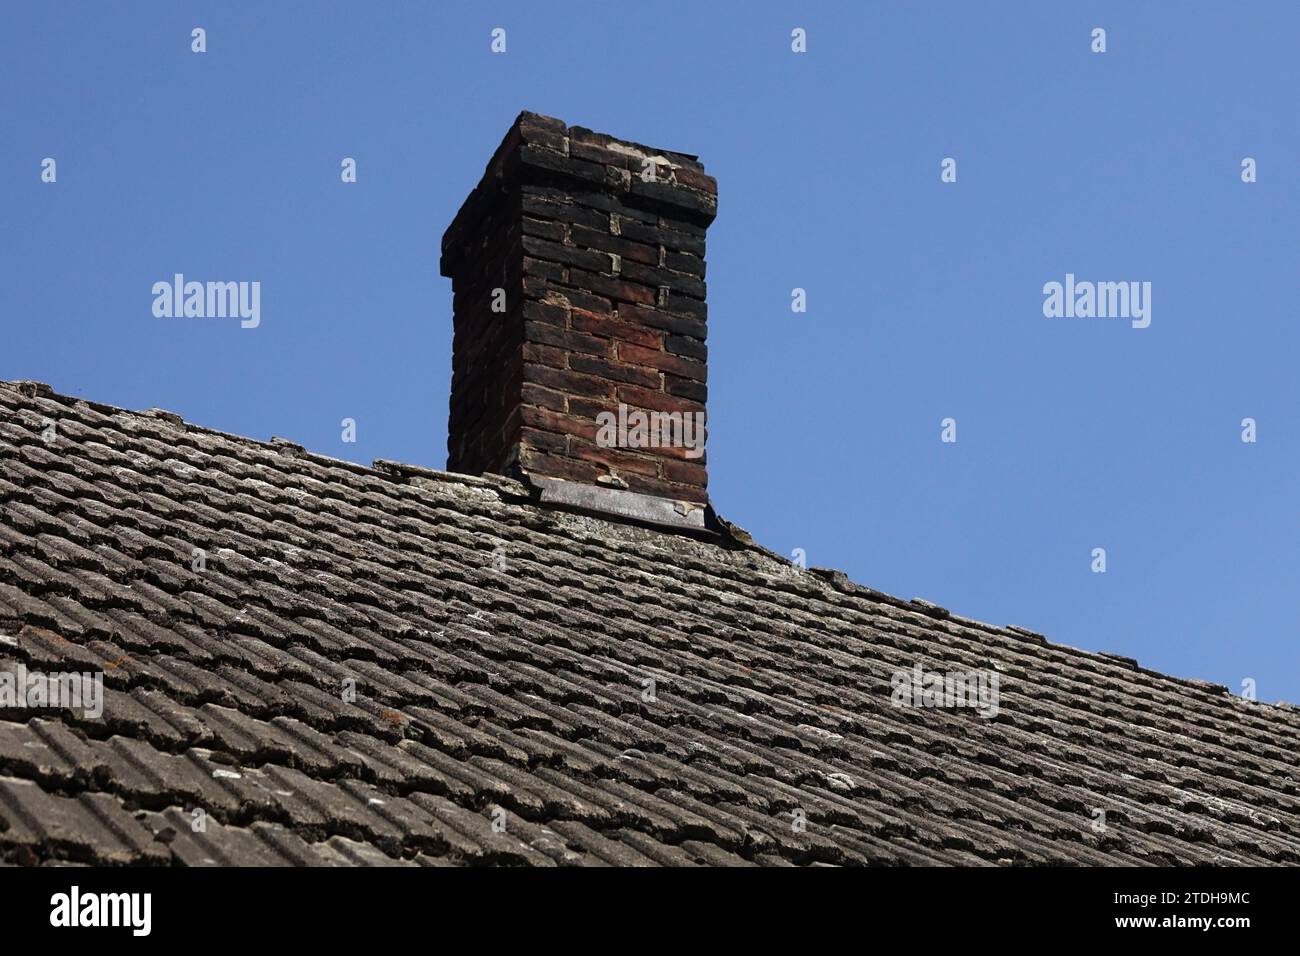 brick chimney stack roof tiles Stock Photo